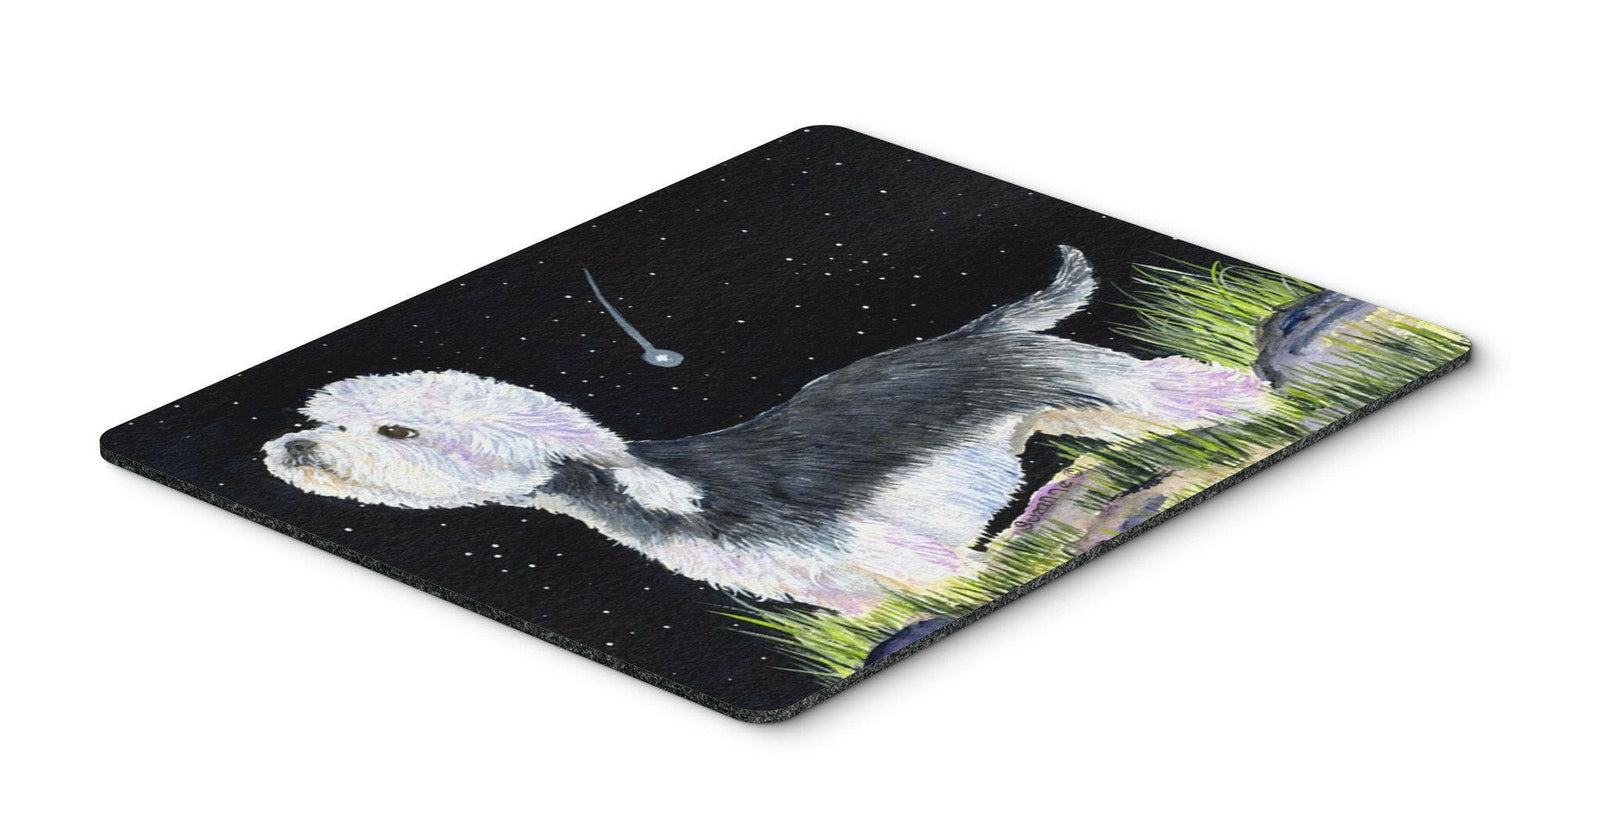 Starry Night Dandie Dinmont Terrier Mouse pad, hot pad, or trivet by Caroline's Treasures